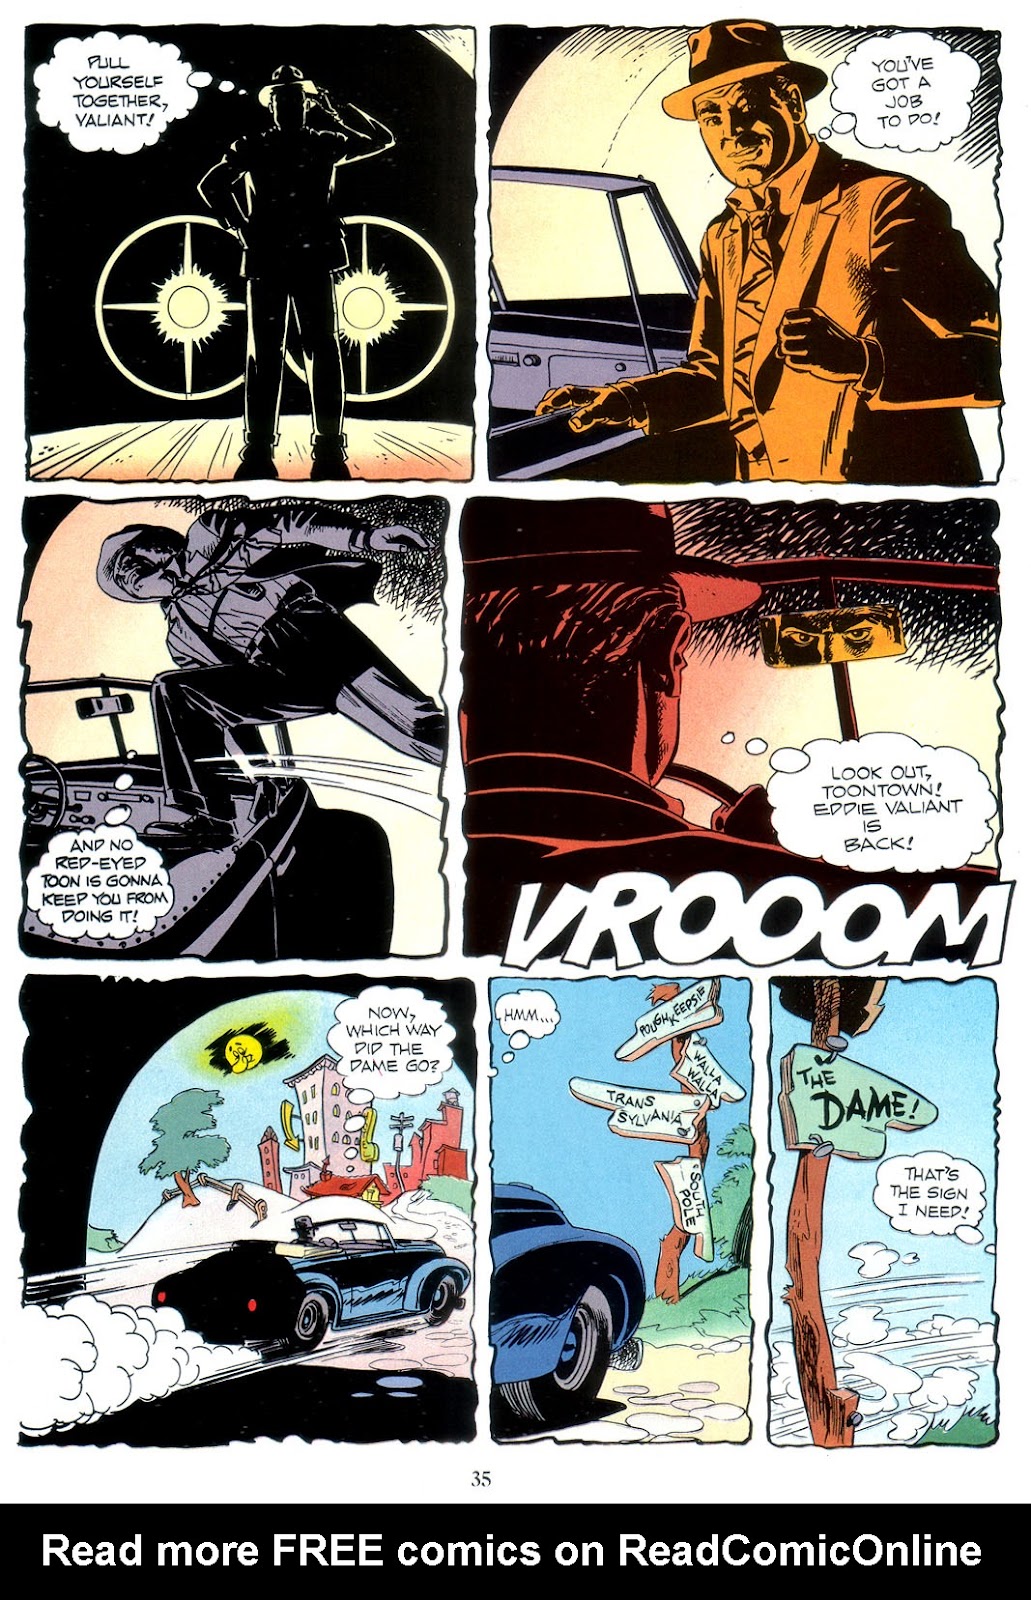 Marvel Graphic Novel issue 41 - Who Framed Roger Rabbit - Page 37